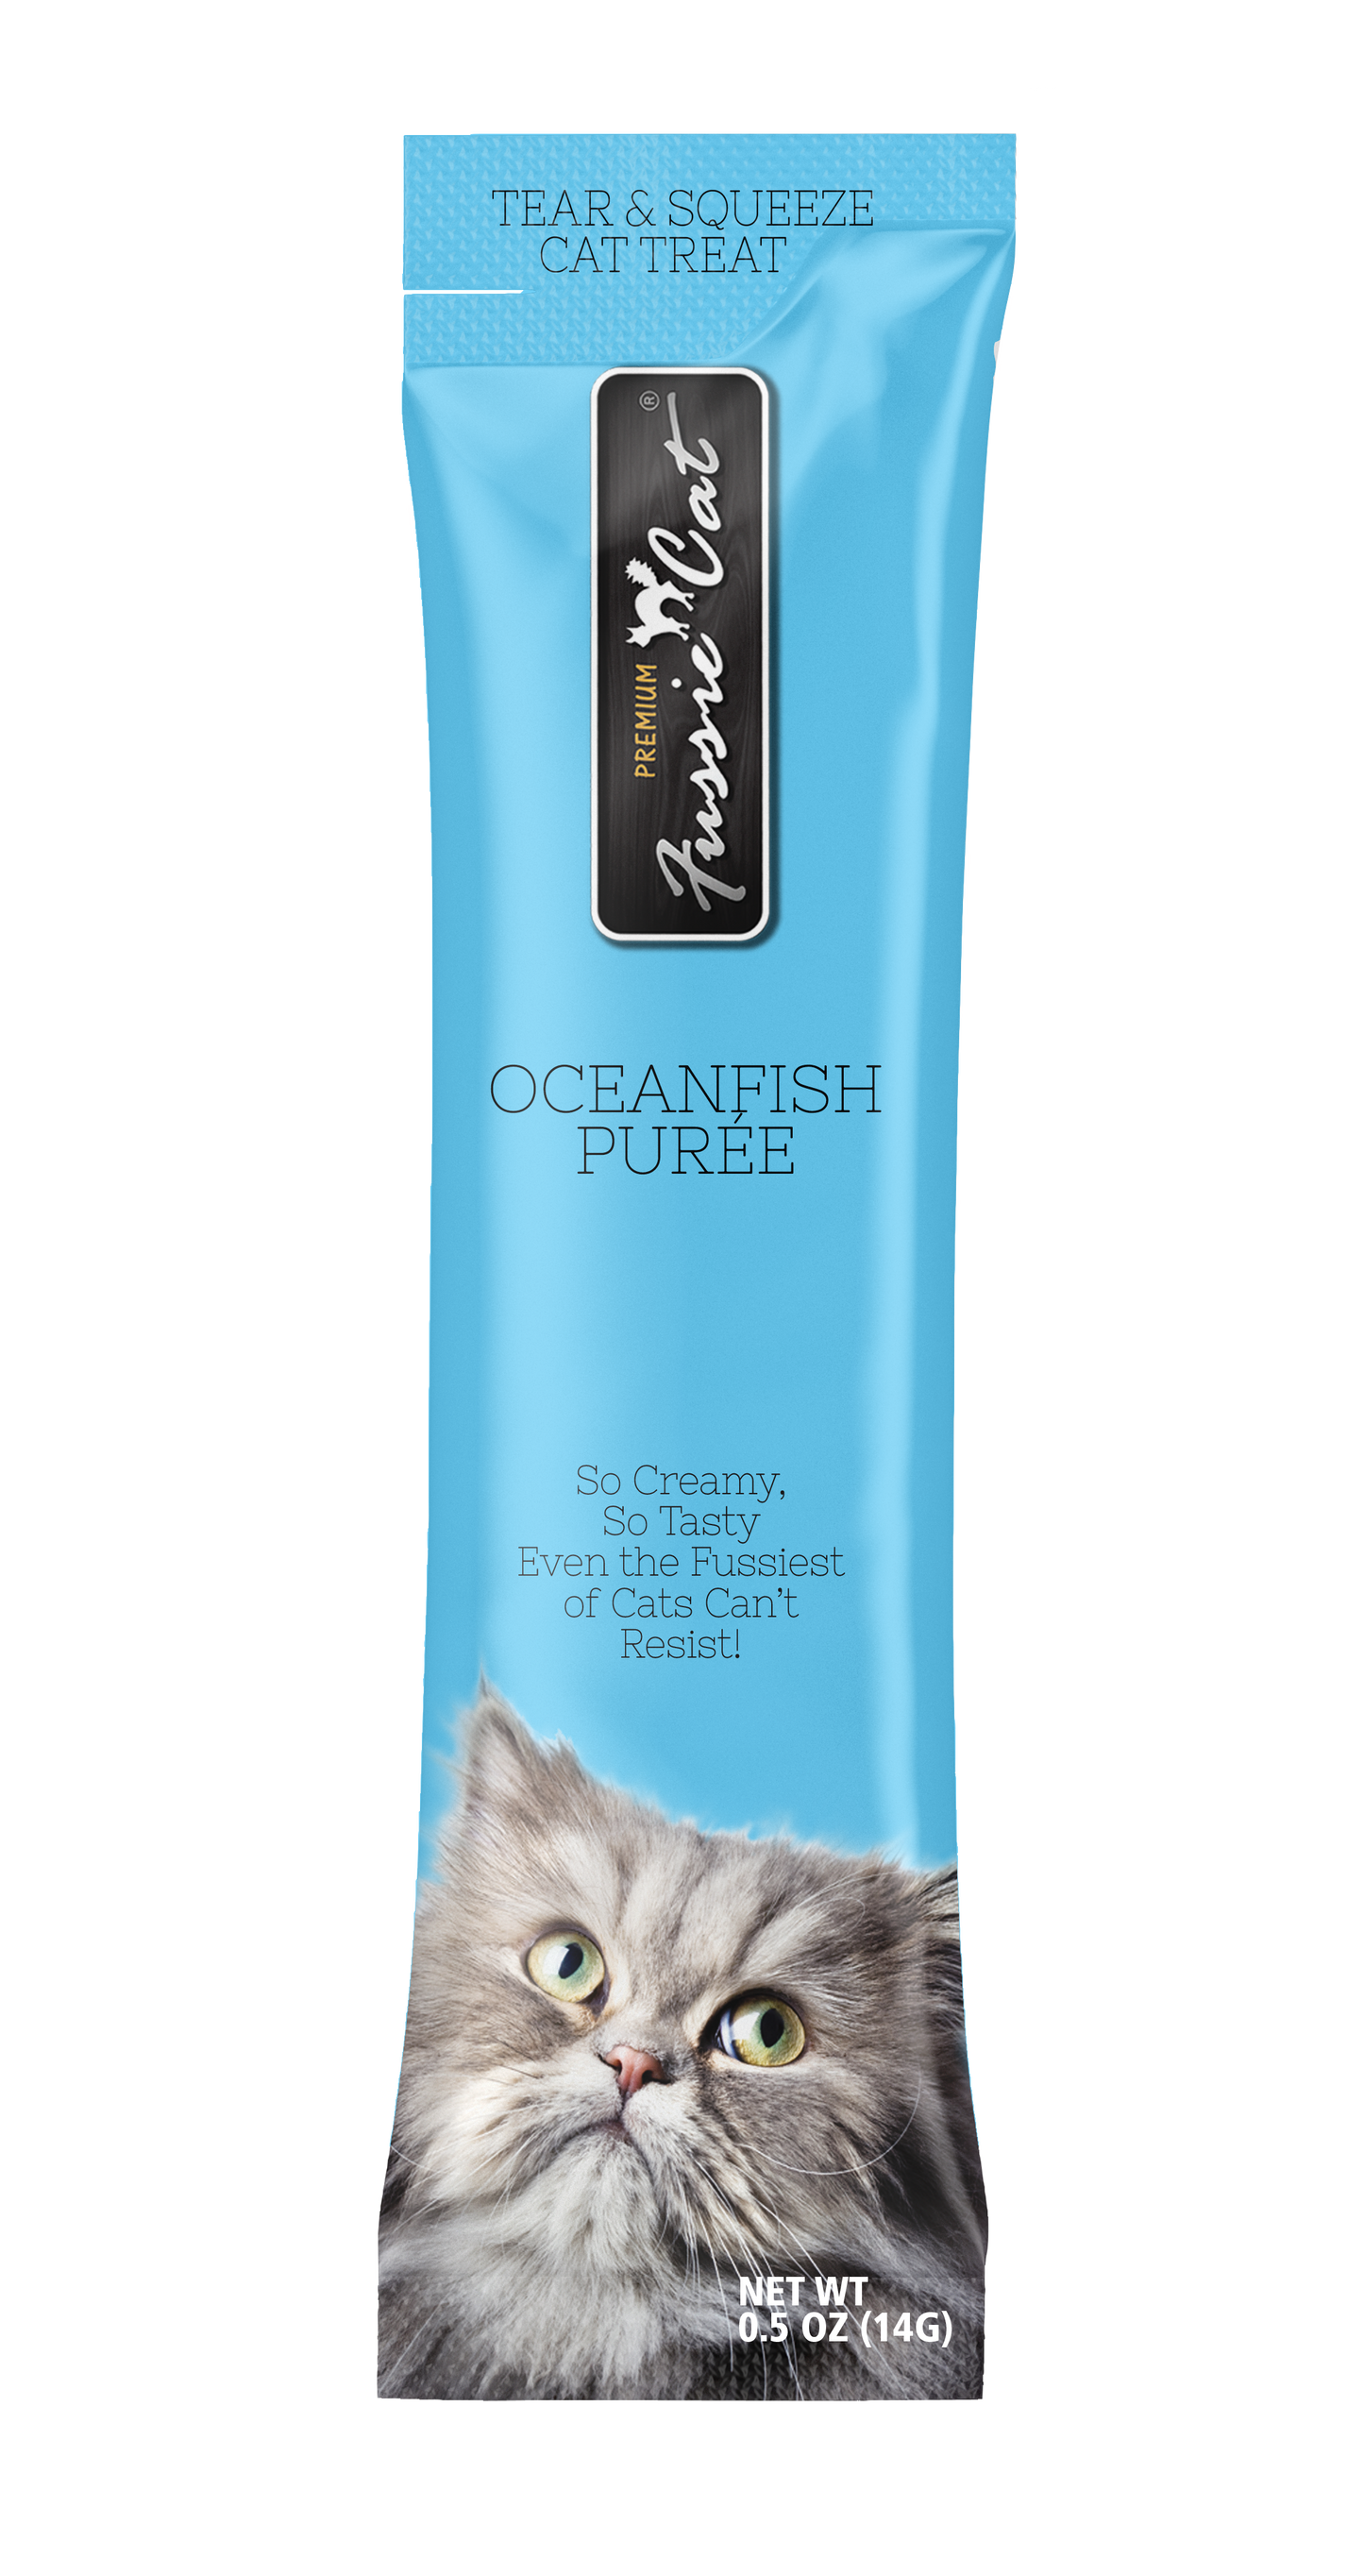 Fussie Cat Oceanfish Purée 0.5-oz, 4-Pack, Cat Treat